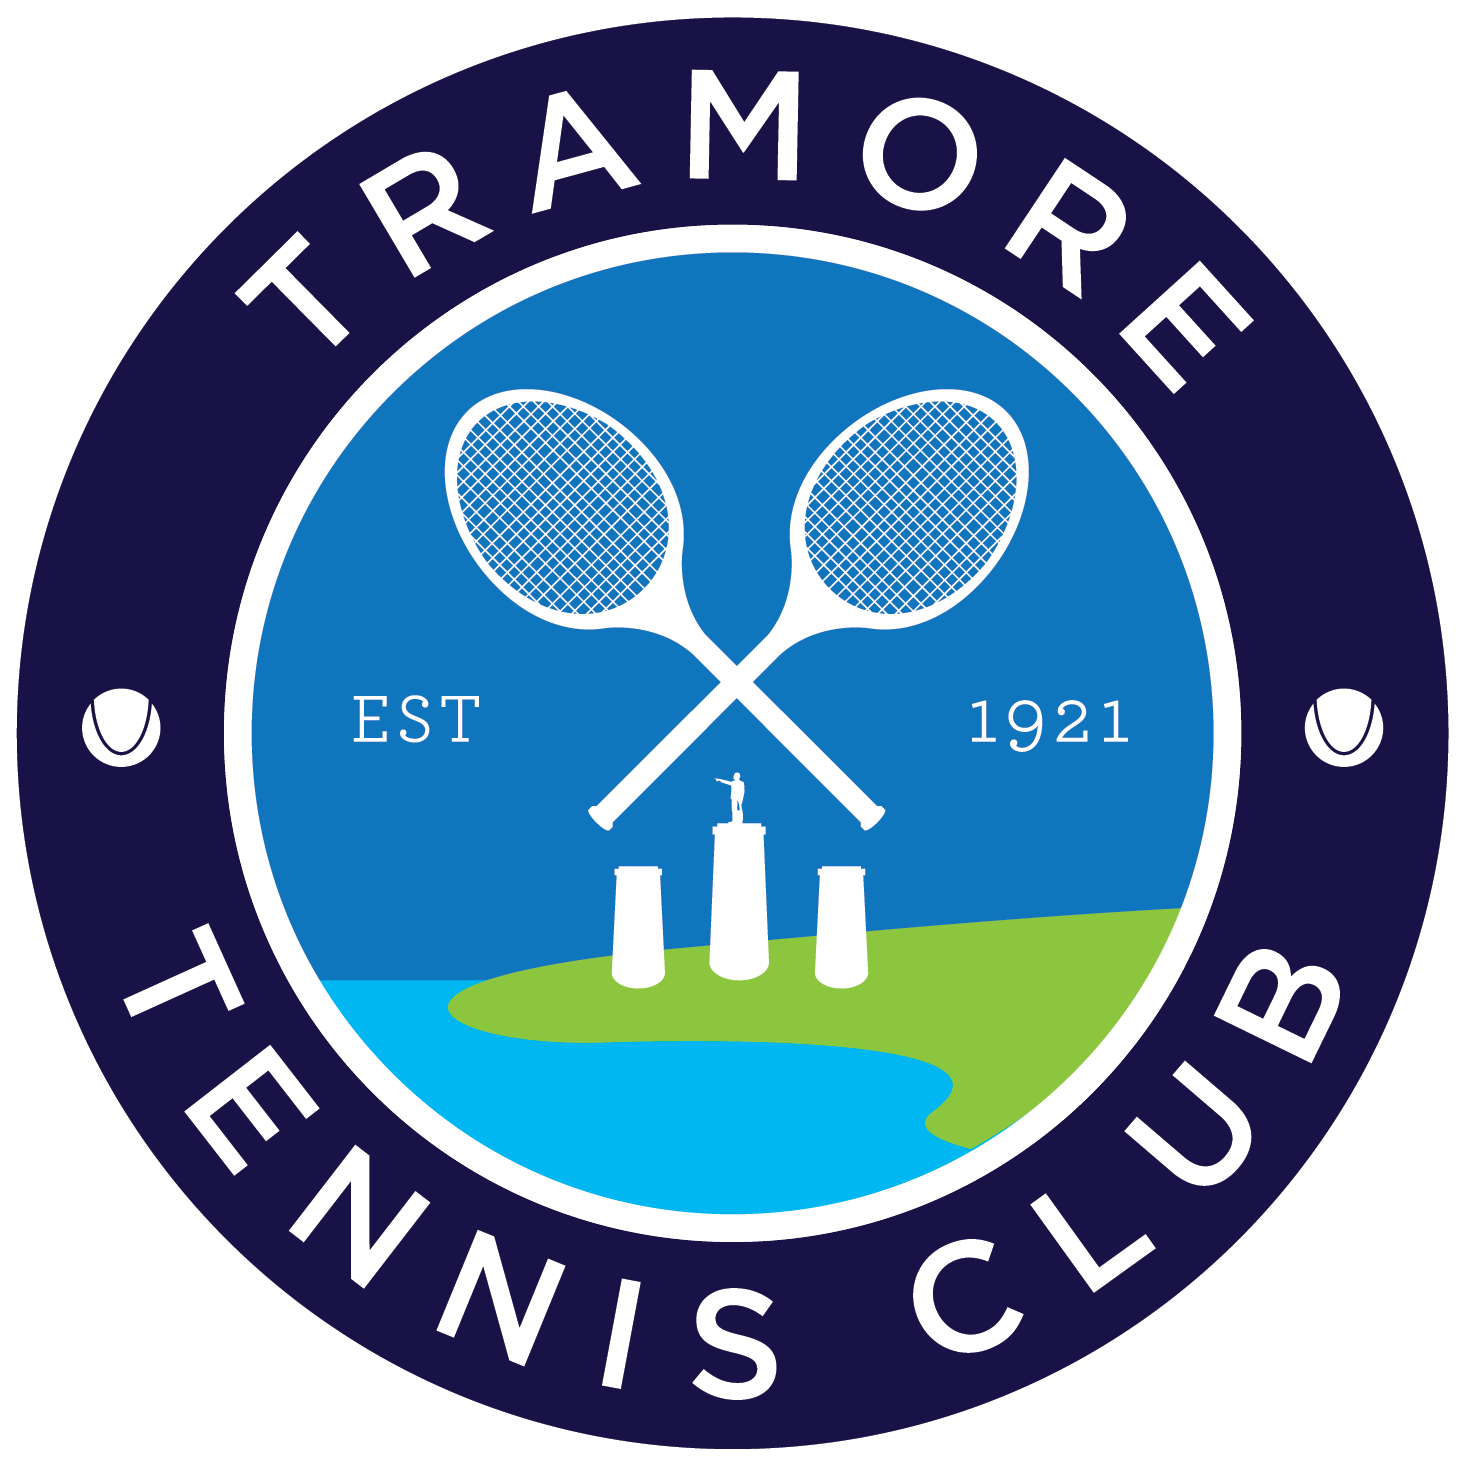 Tramore Tennis